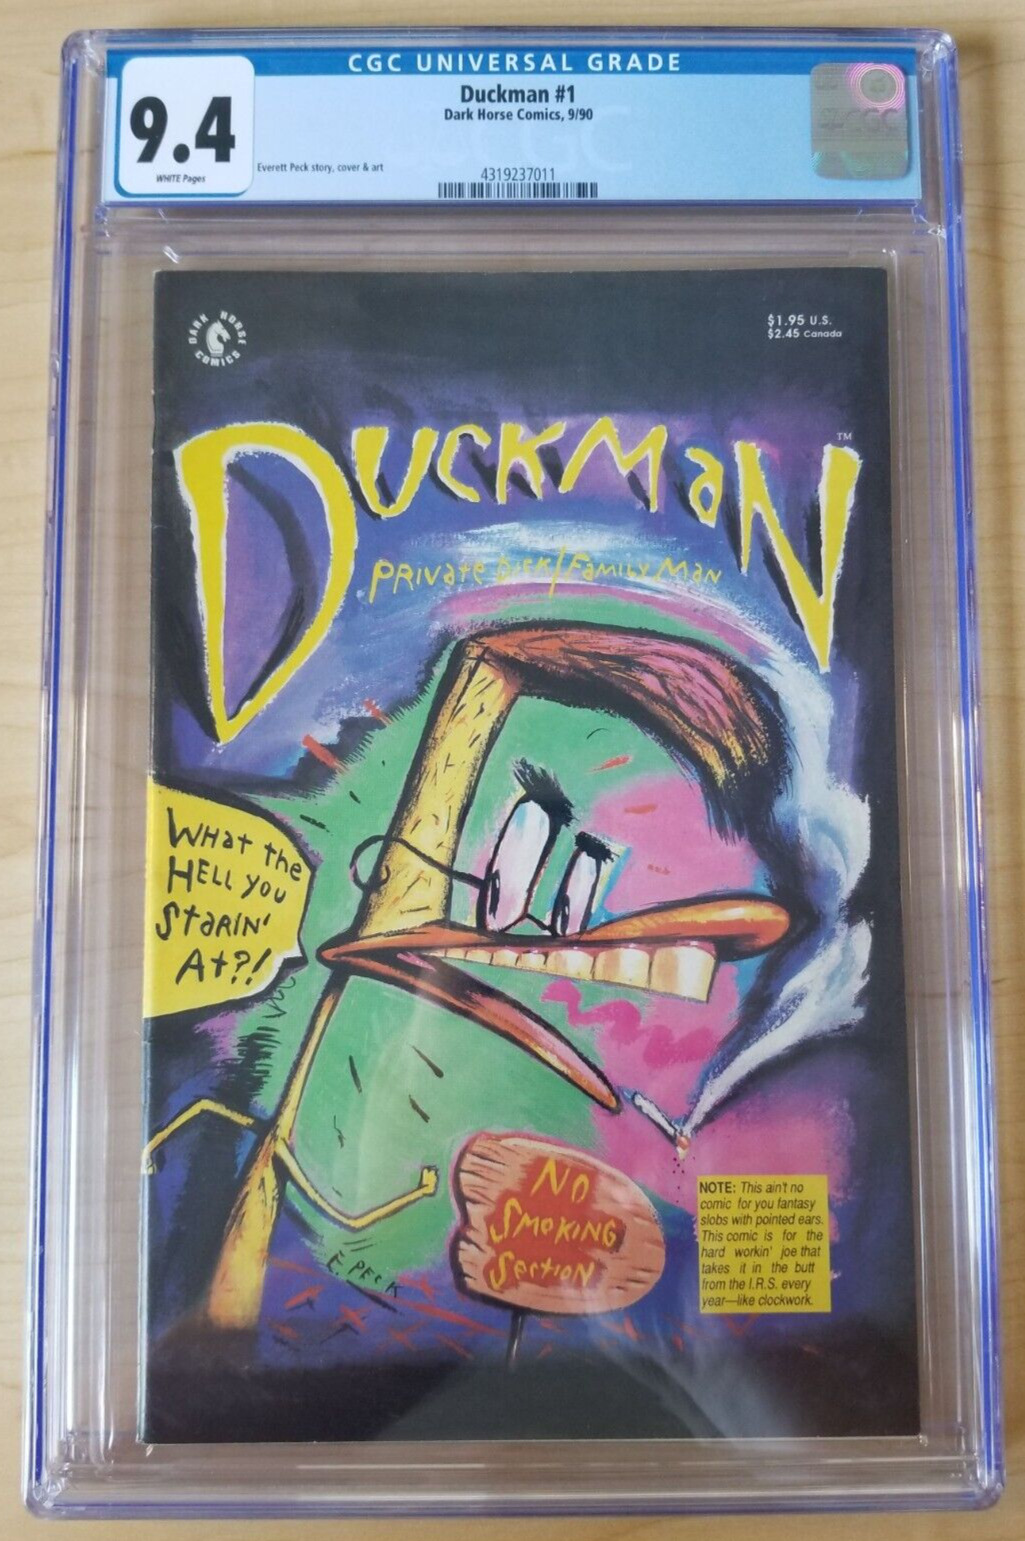 Duckman issue #1 - CGC 9.4 (1990, Dark Horse Comics) 1st appearance